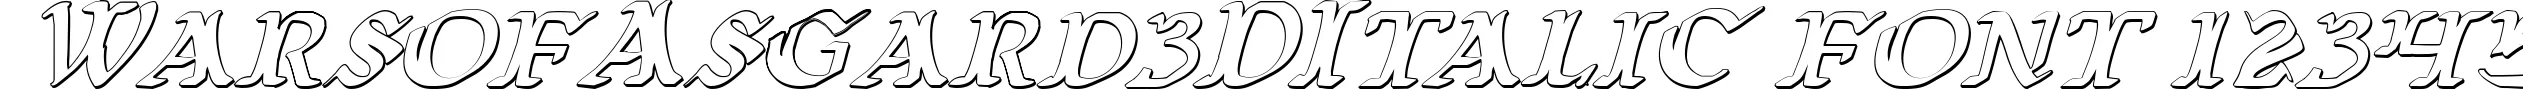 Dynamic WarsofAsgard3DItalic Font Preview https://safirsoft.com